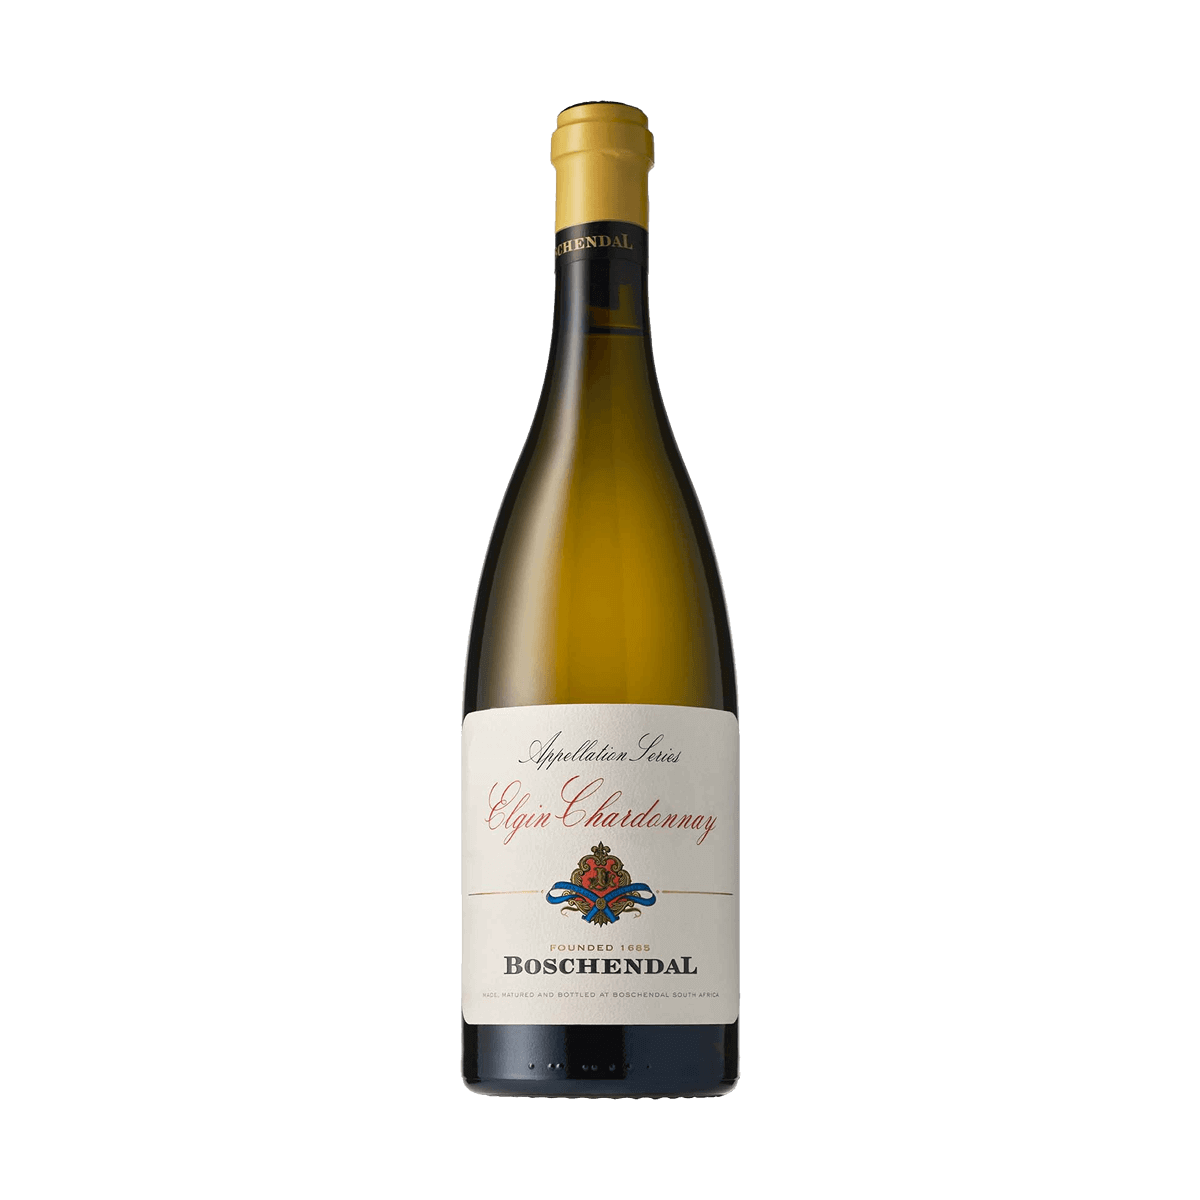 Boschendal Elgin Chardonnay 2020